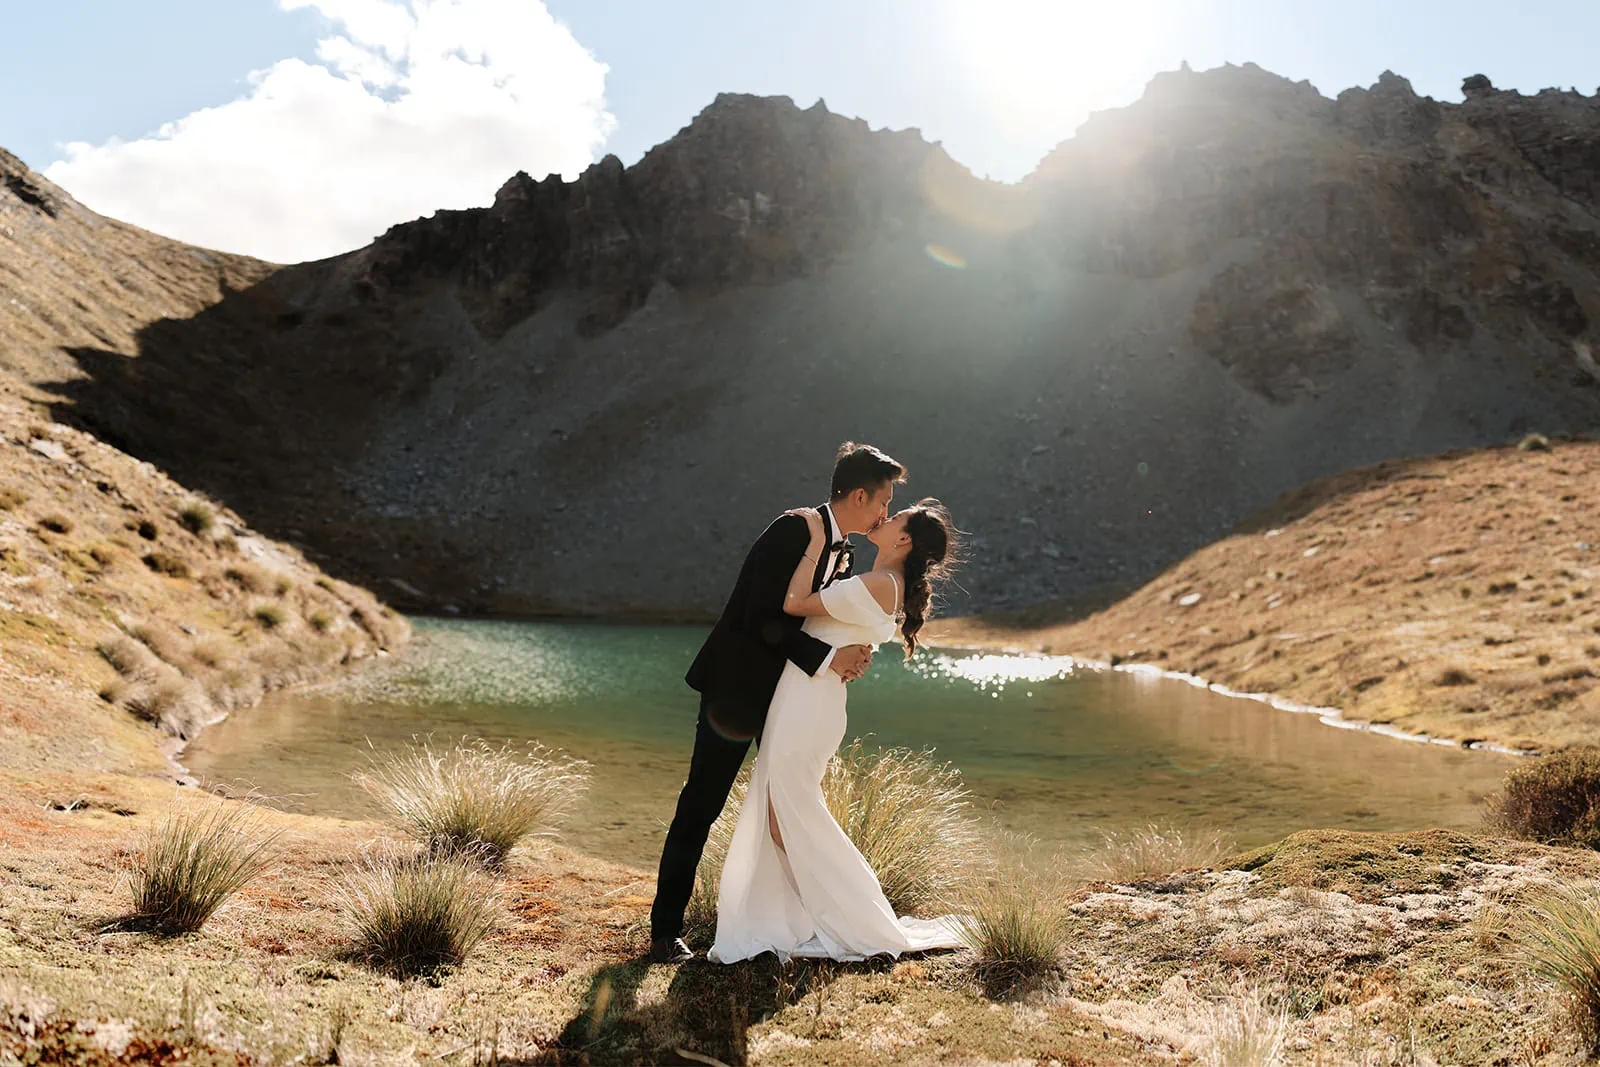 Keywords: bride, groom, kiss, lake, mountains.